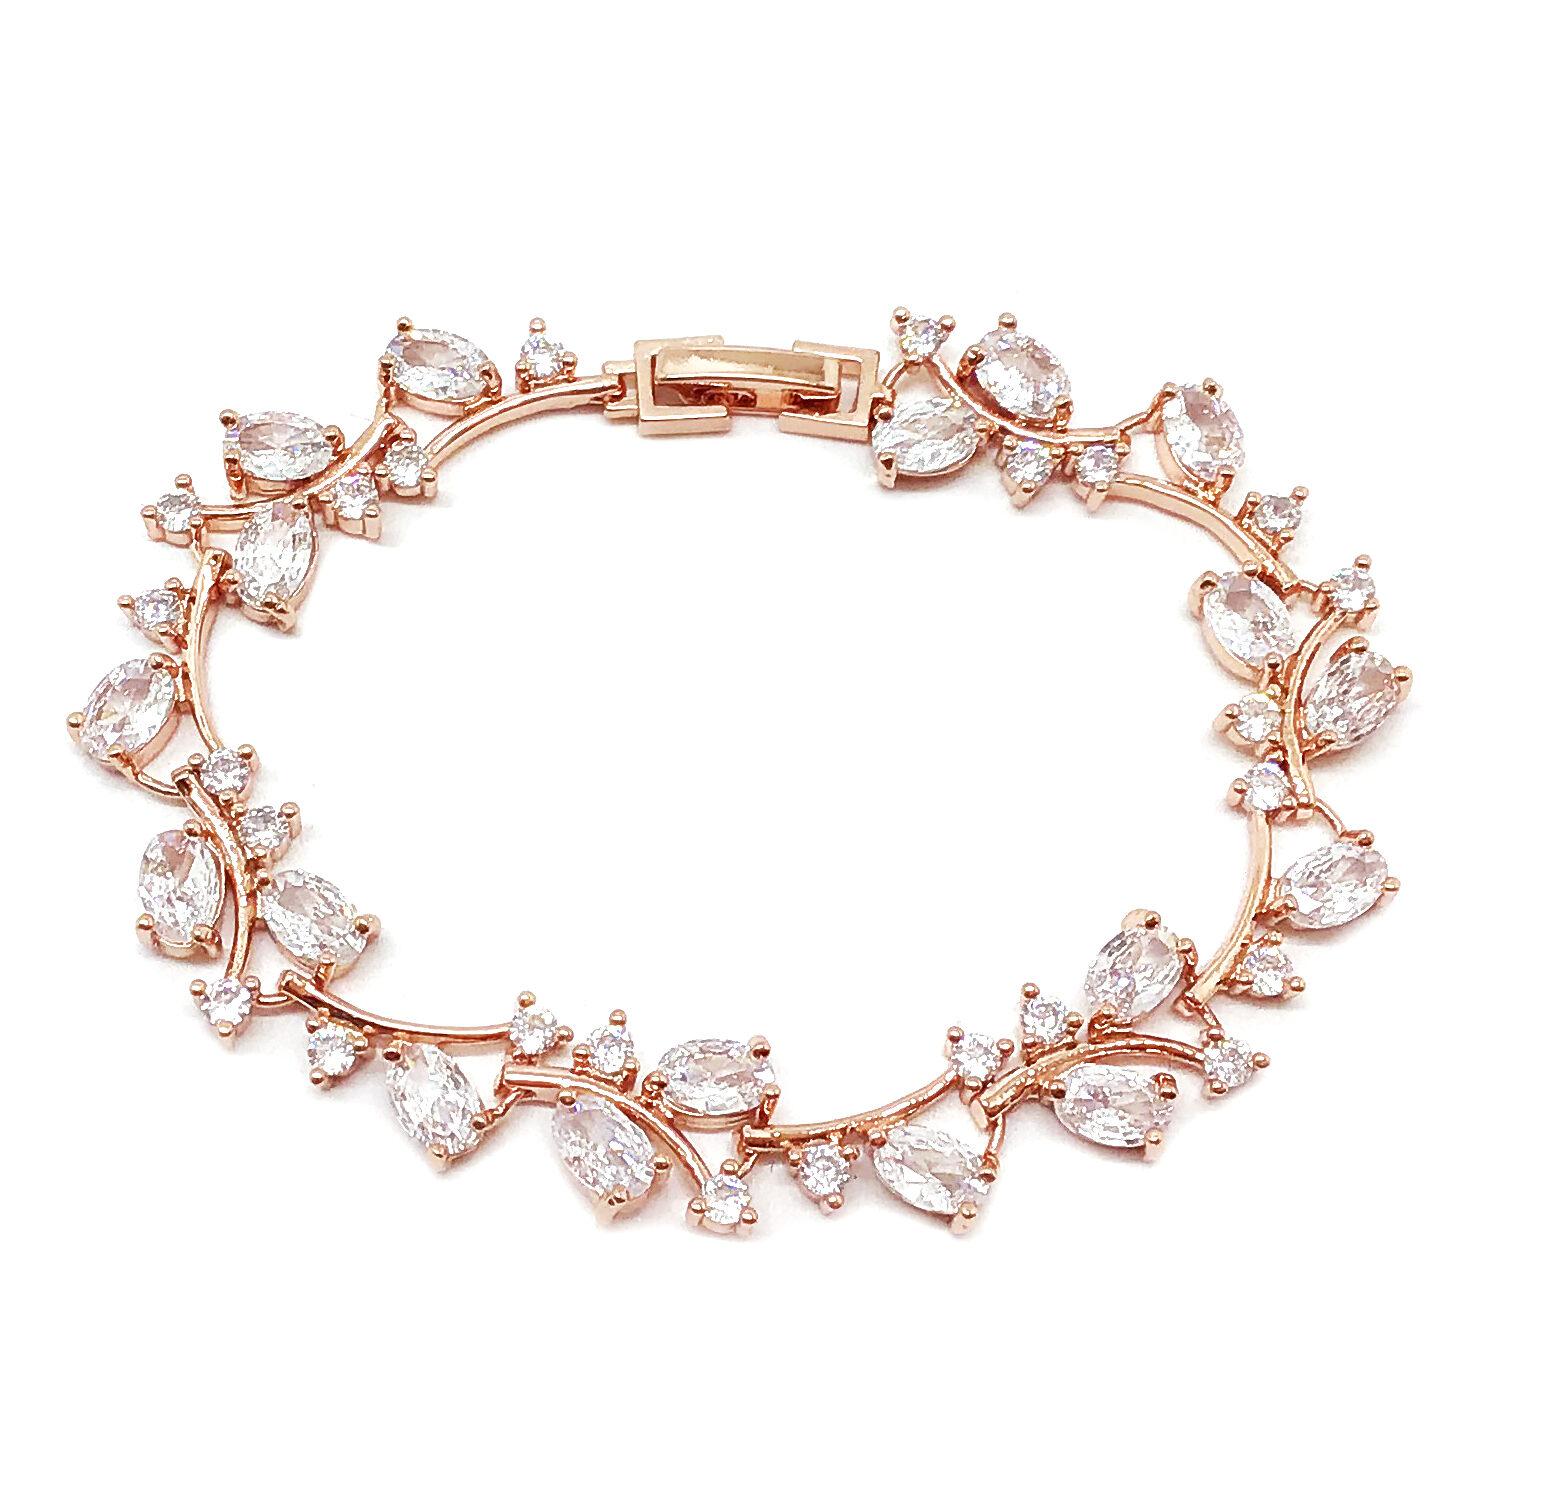 Diamond Bracelet Australia|Briana|Jeanette Maree|Shop Online Now